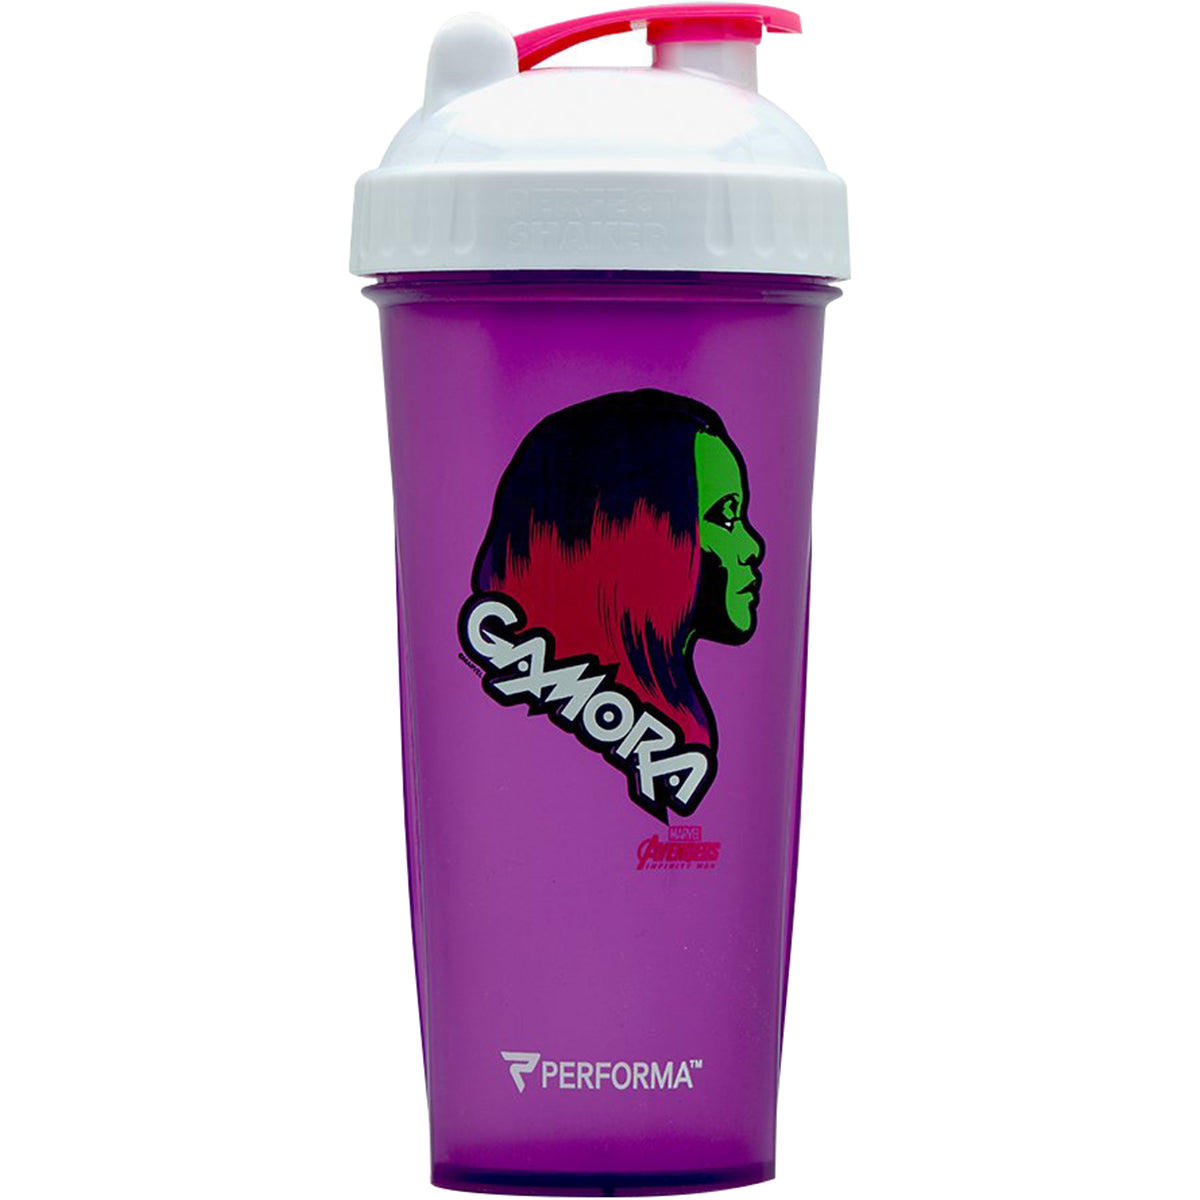 Performa PerfectShaker Avengers Infinity War Shaker Cup Bottle - Gamora PerfectShaker